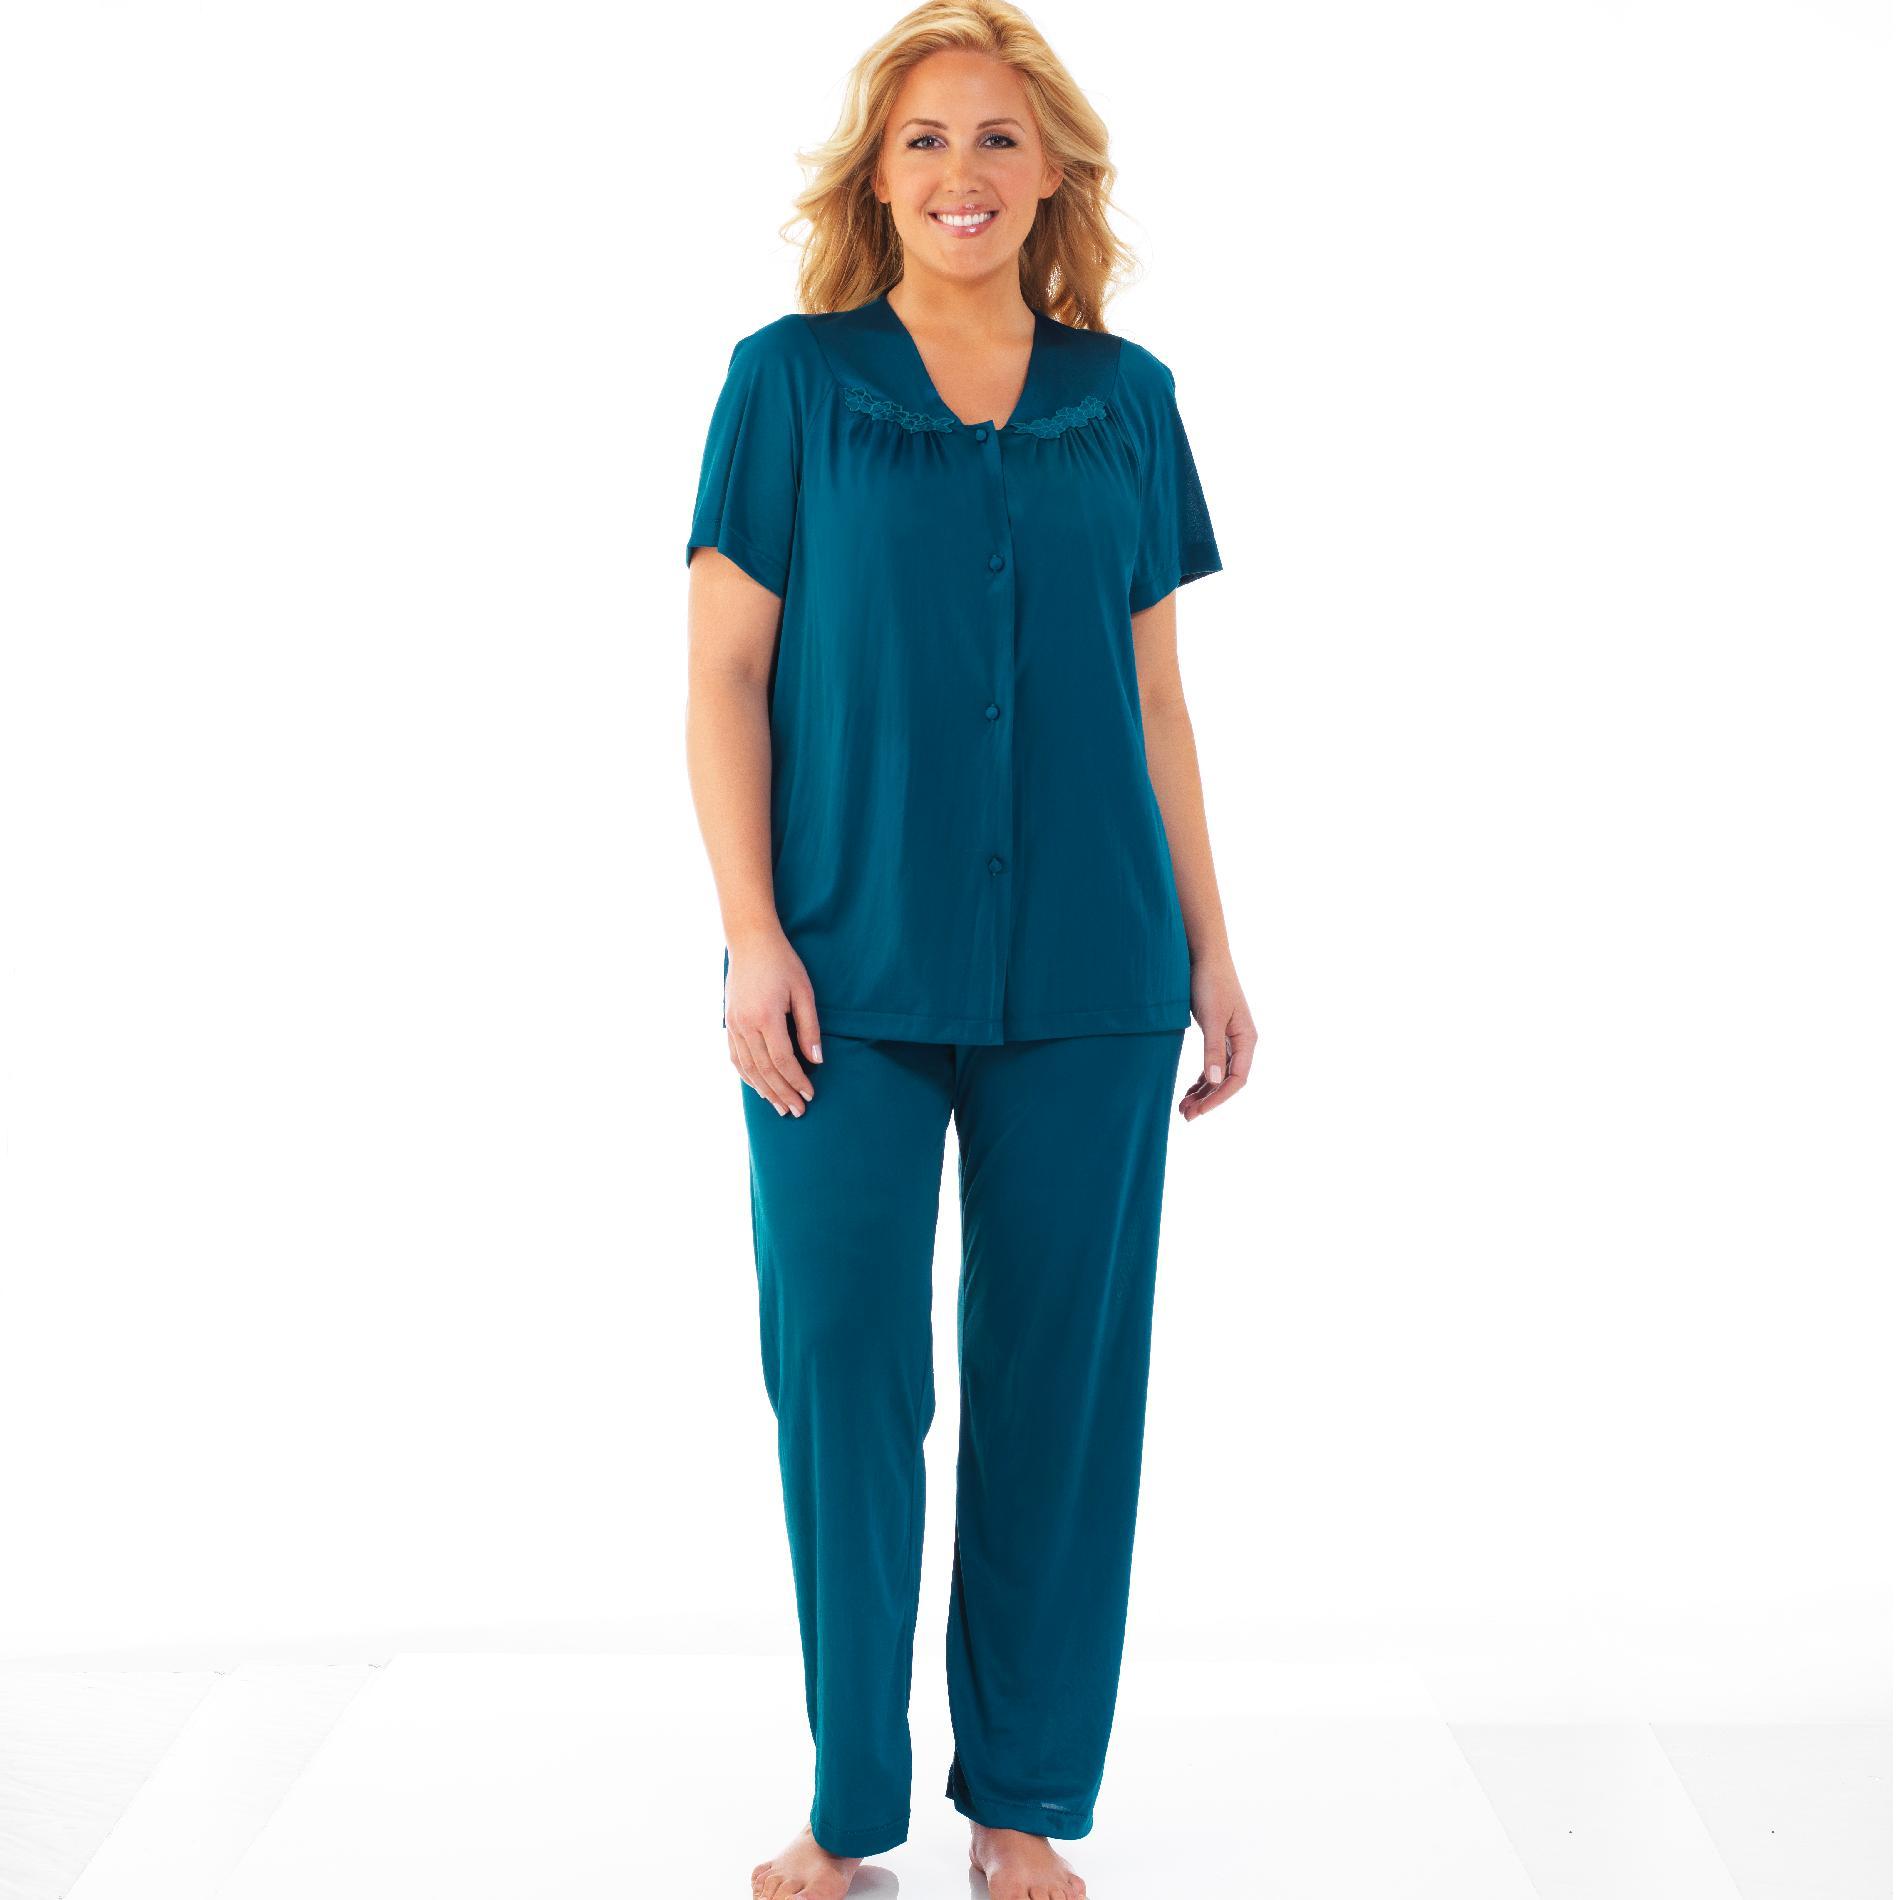 UPC 083623084572 product image for Women's Vanity Fair Colortura Short Sleeve Pajama Set | upcitemdb.com